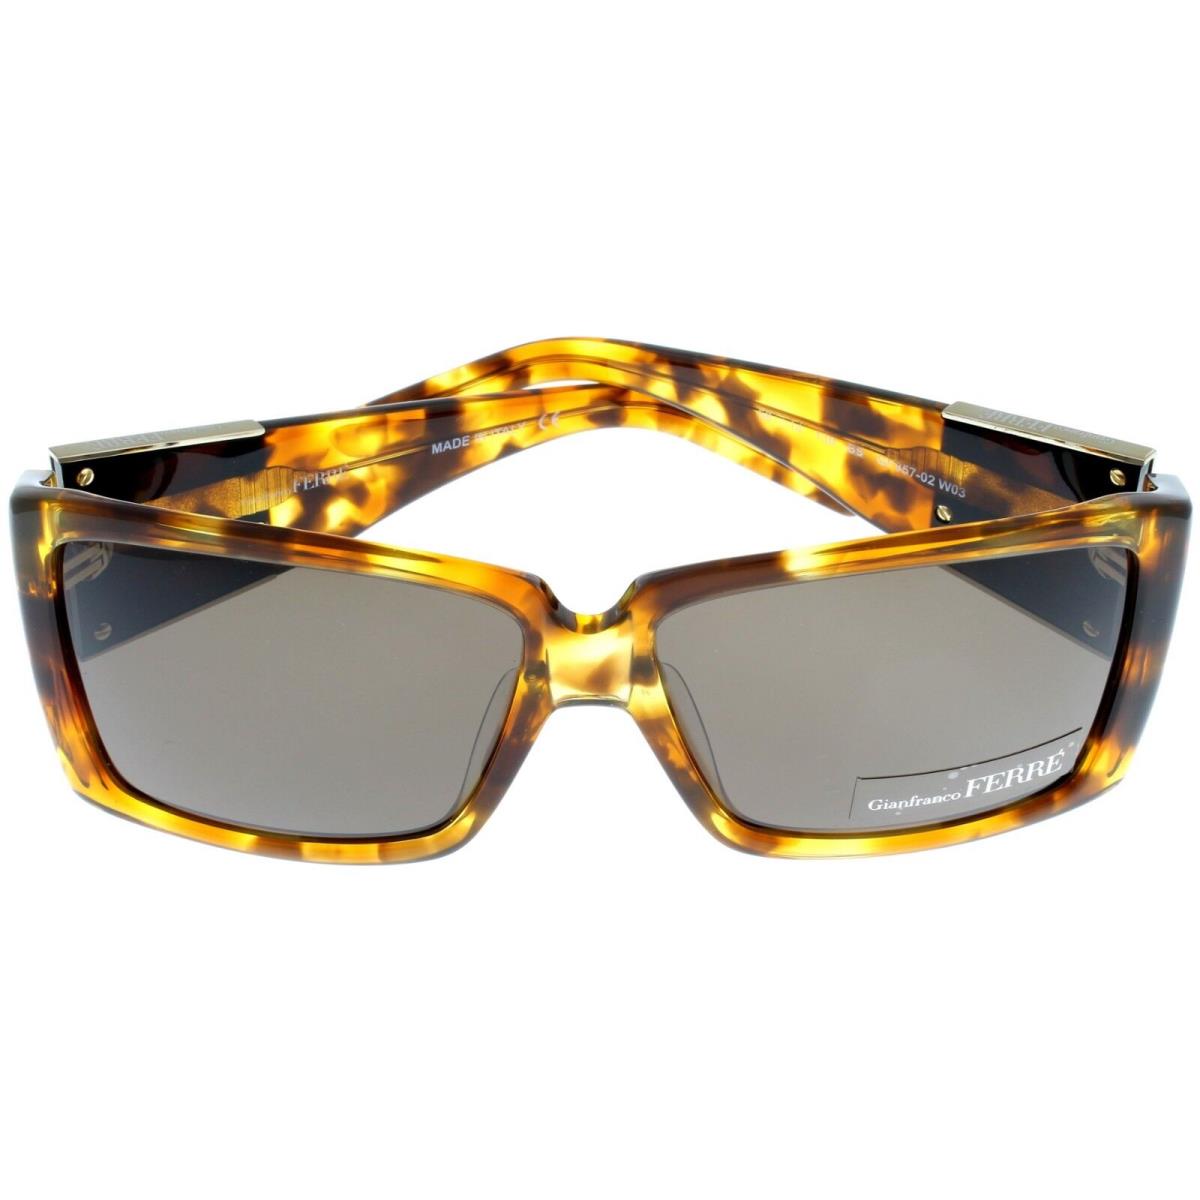 Gianfranco Ferre Sunglasses Women Tortoise Brown Rectangular GF957 02